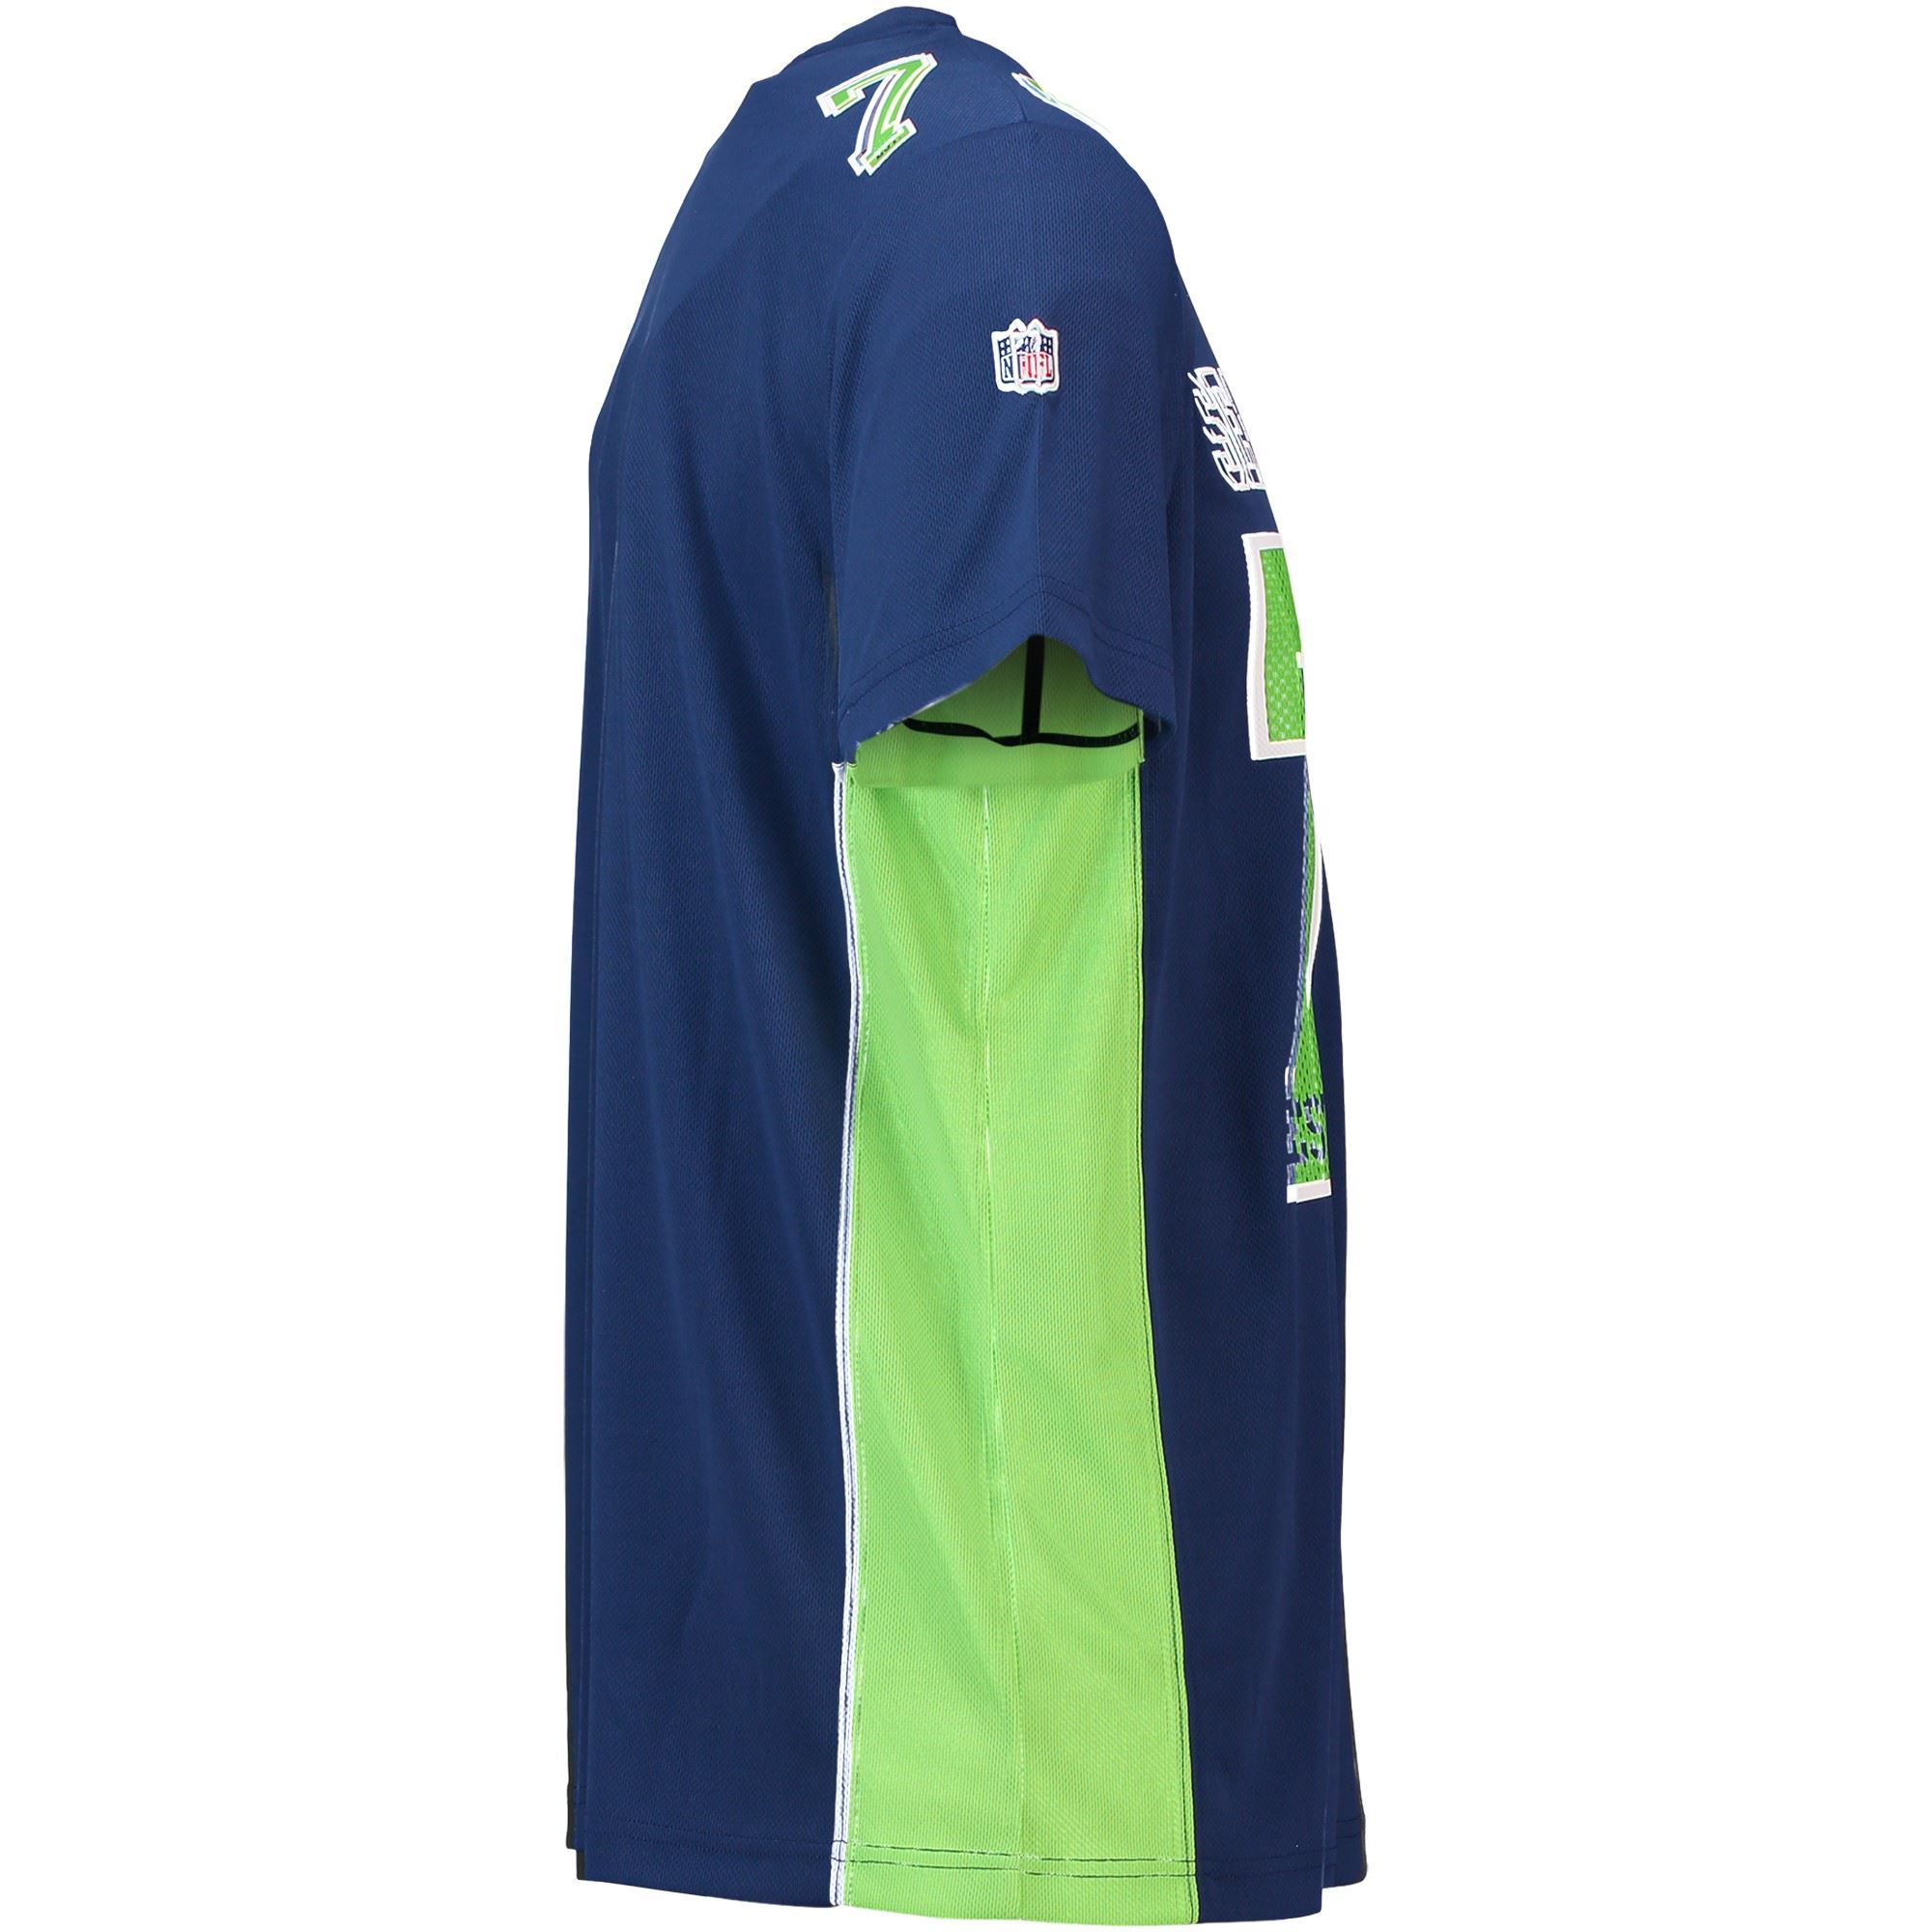 Seattle Seahawks NFL Players Poly Mesh Green T-Shirt Fanatics